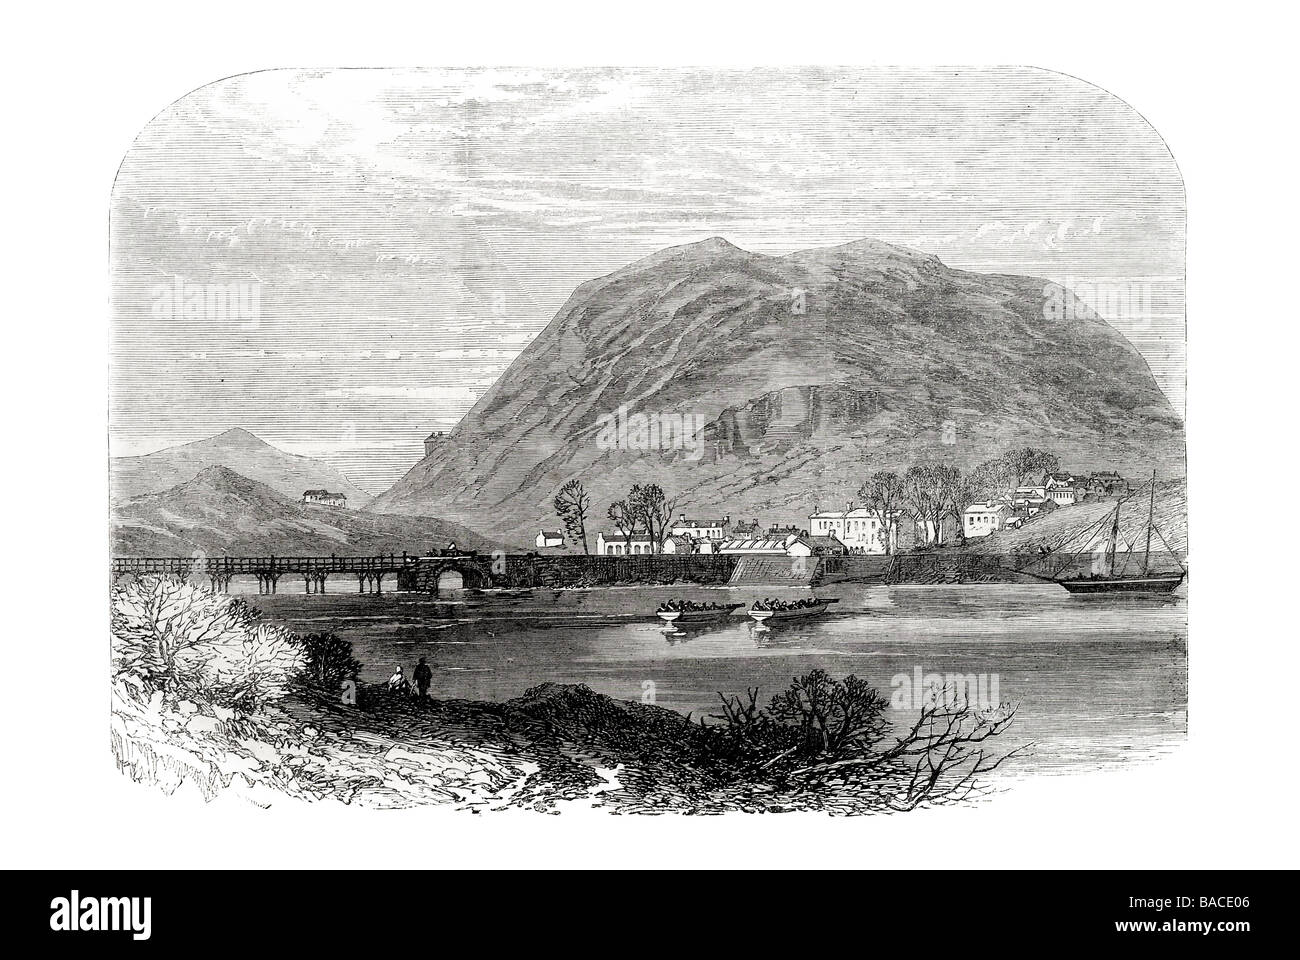 town of cahirciveen Iveragh peninsula southwest coast Ireland Valentia Island 1867 Stock Photo